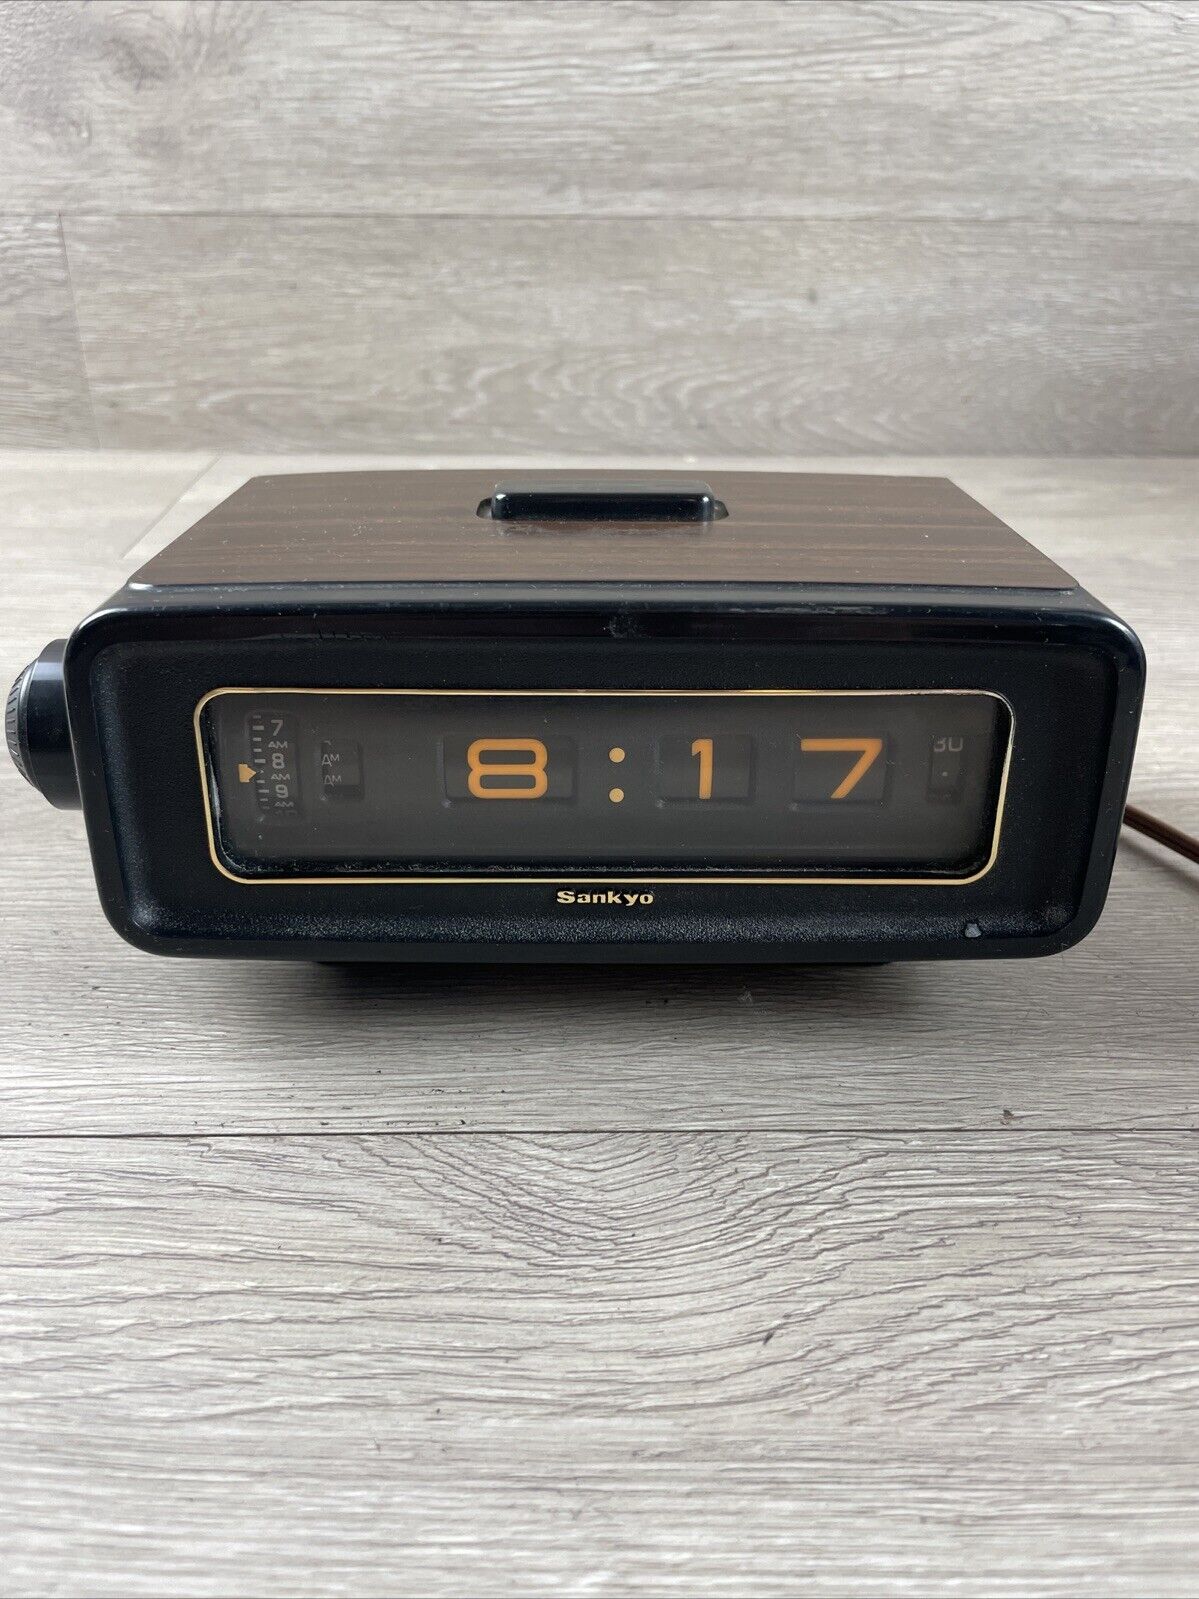 VINTAGE SANKYO Flip Alarm Clock Japan Space Age 1970s Model 304 SN TESTED